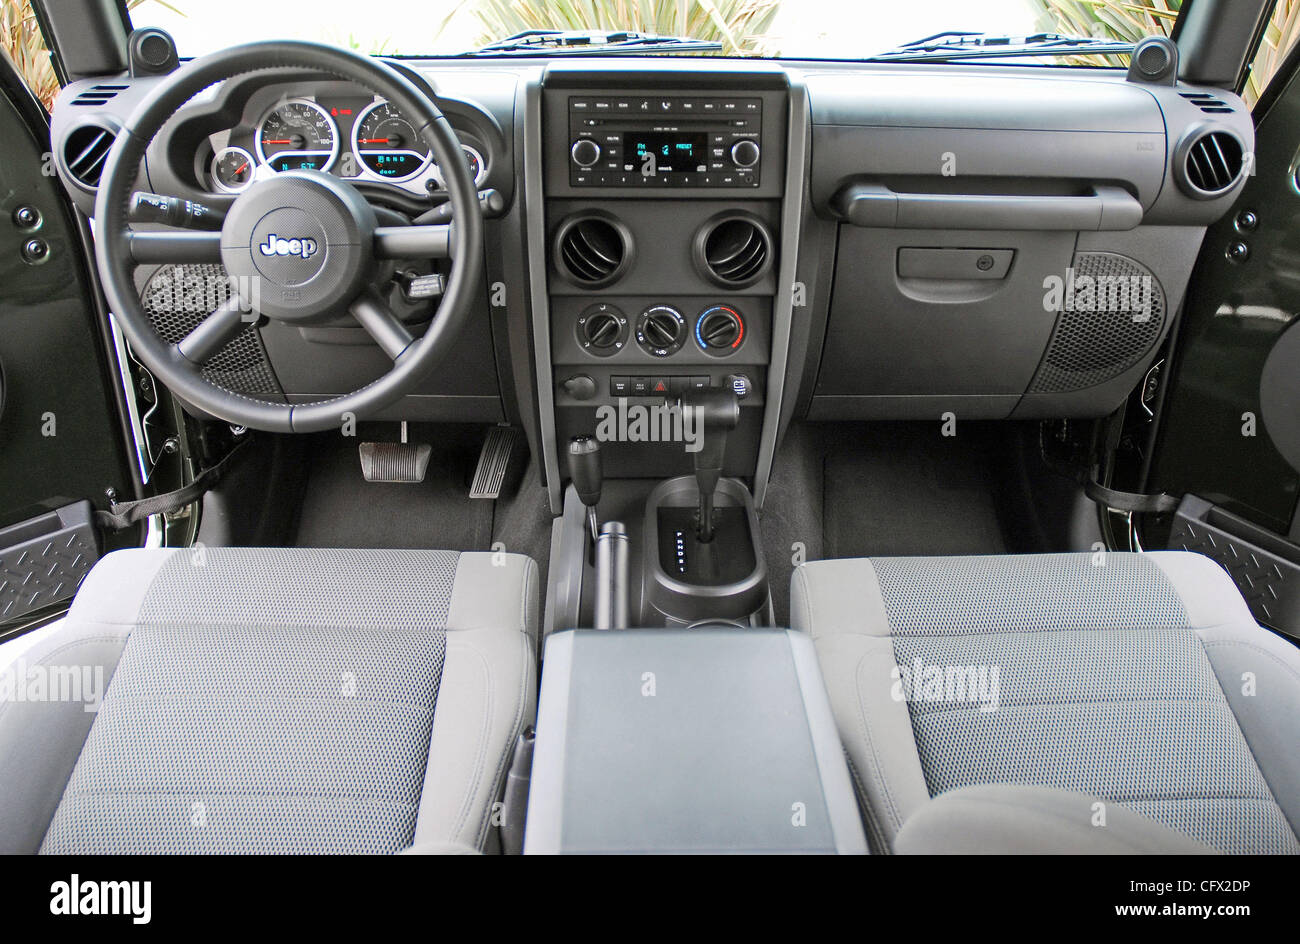 Dashboard 2007 Jeep Wrangler Rubicon Stock Photo - Alamy